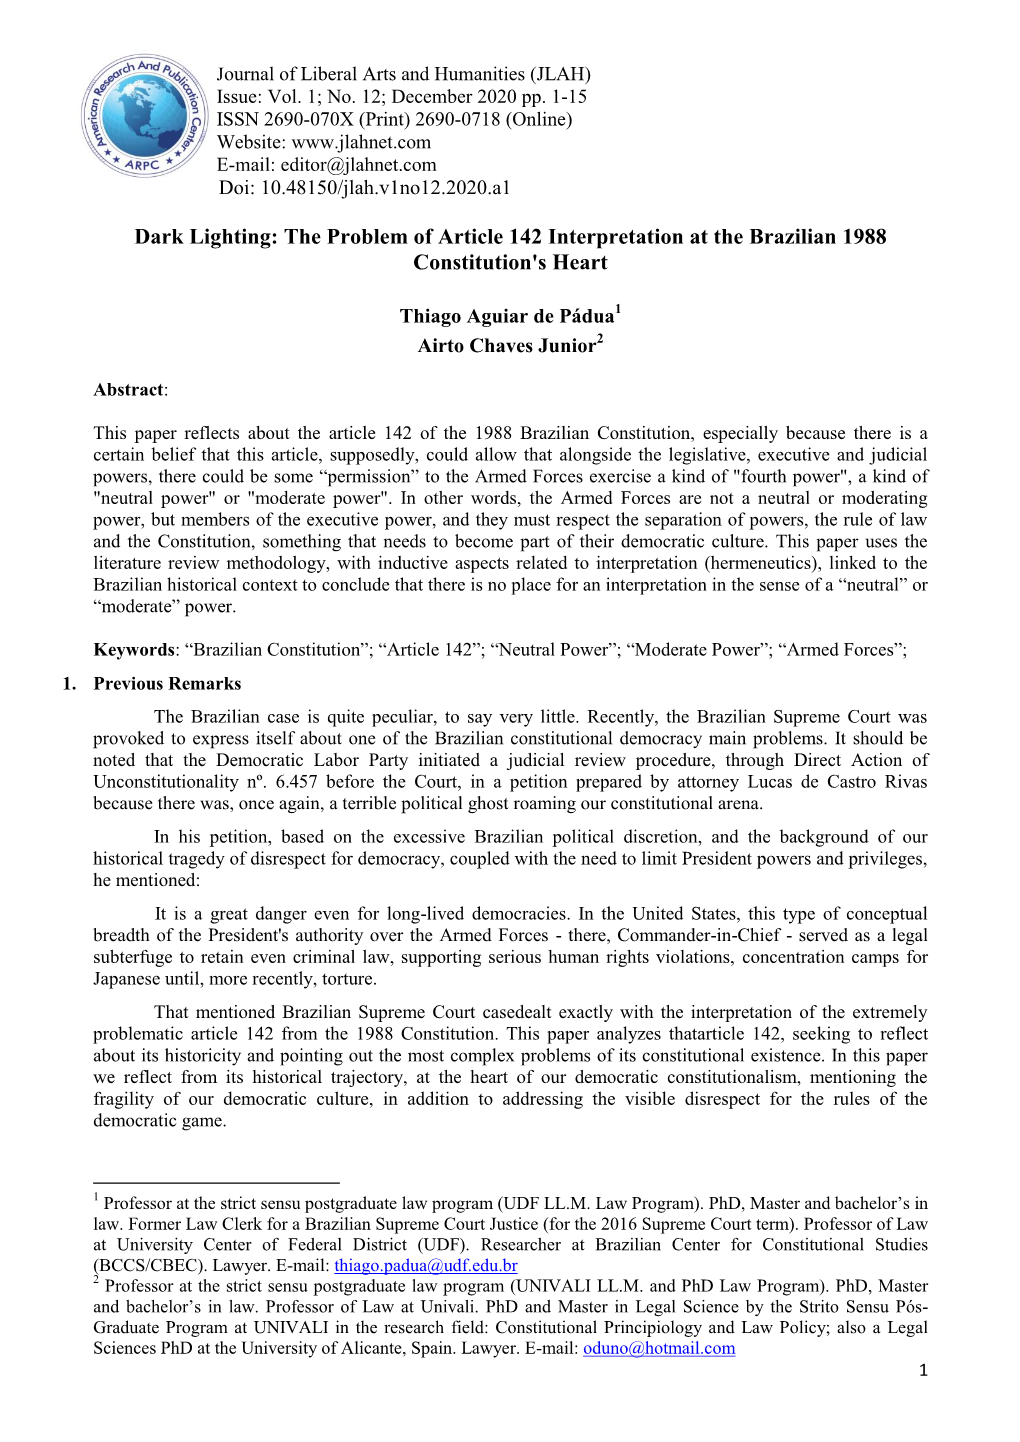 Dark Lighting: the Problem of Article 142 Interpretation at the Brazilian 1988 Constitution's Heart